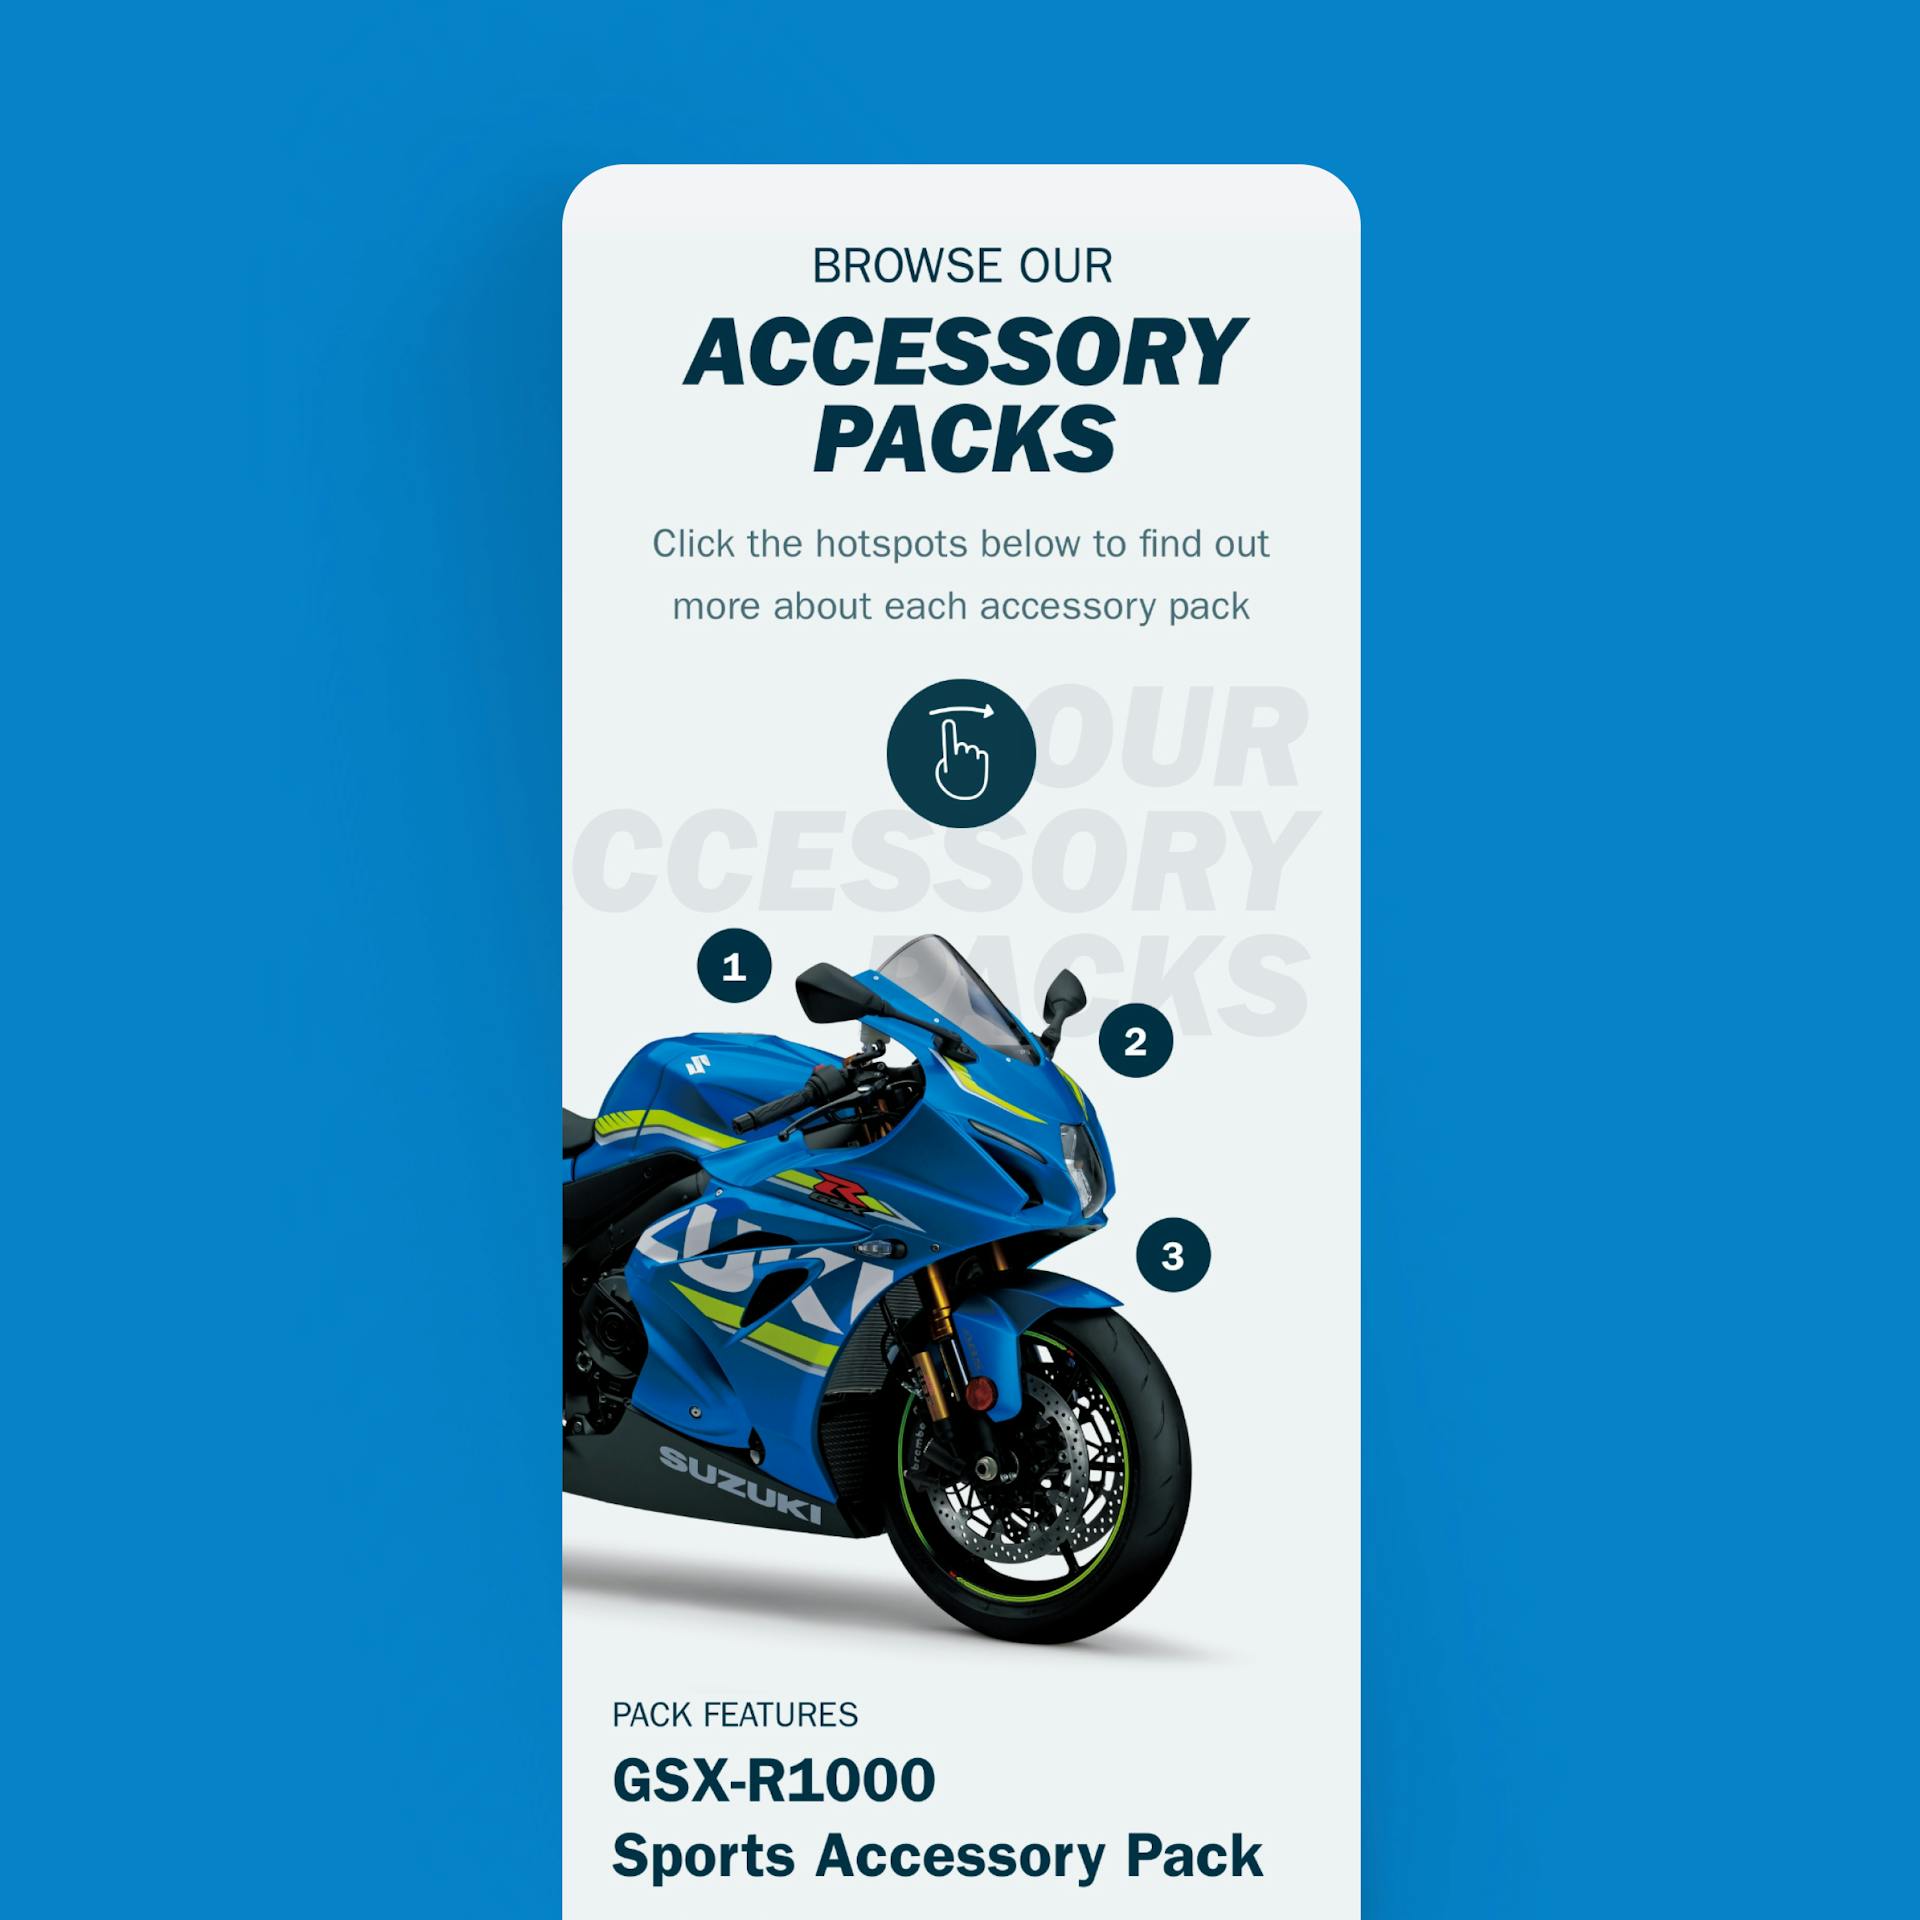 A Suzuki bike accessory product page